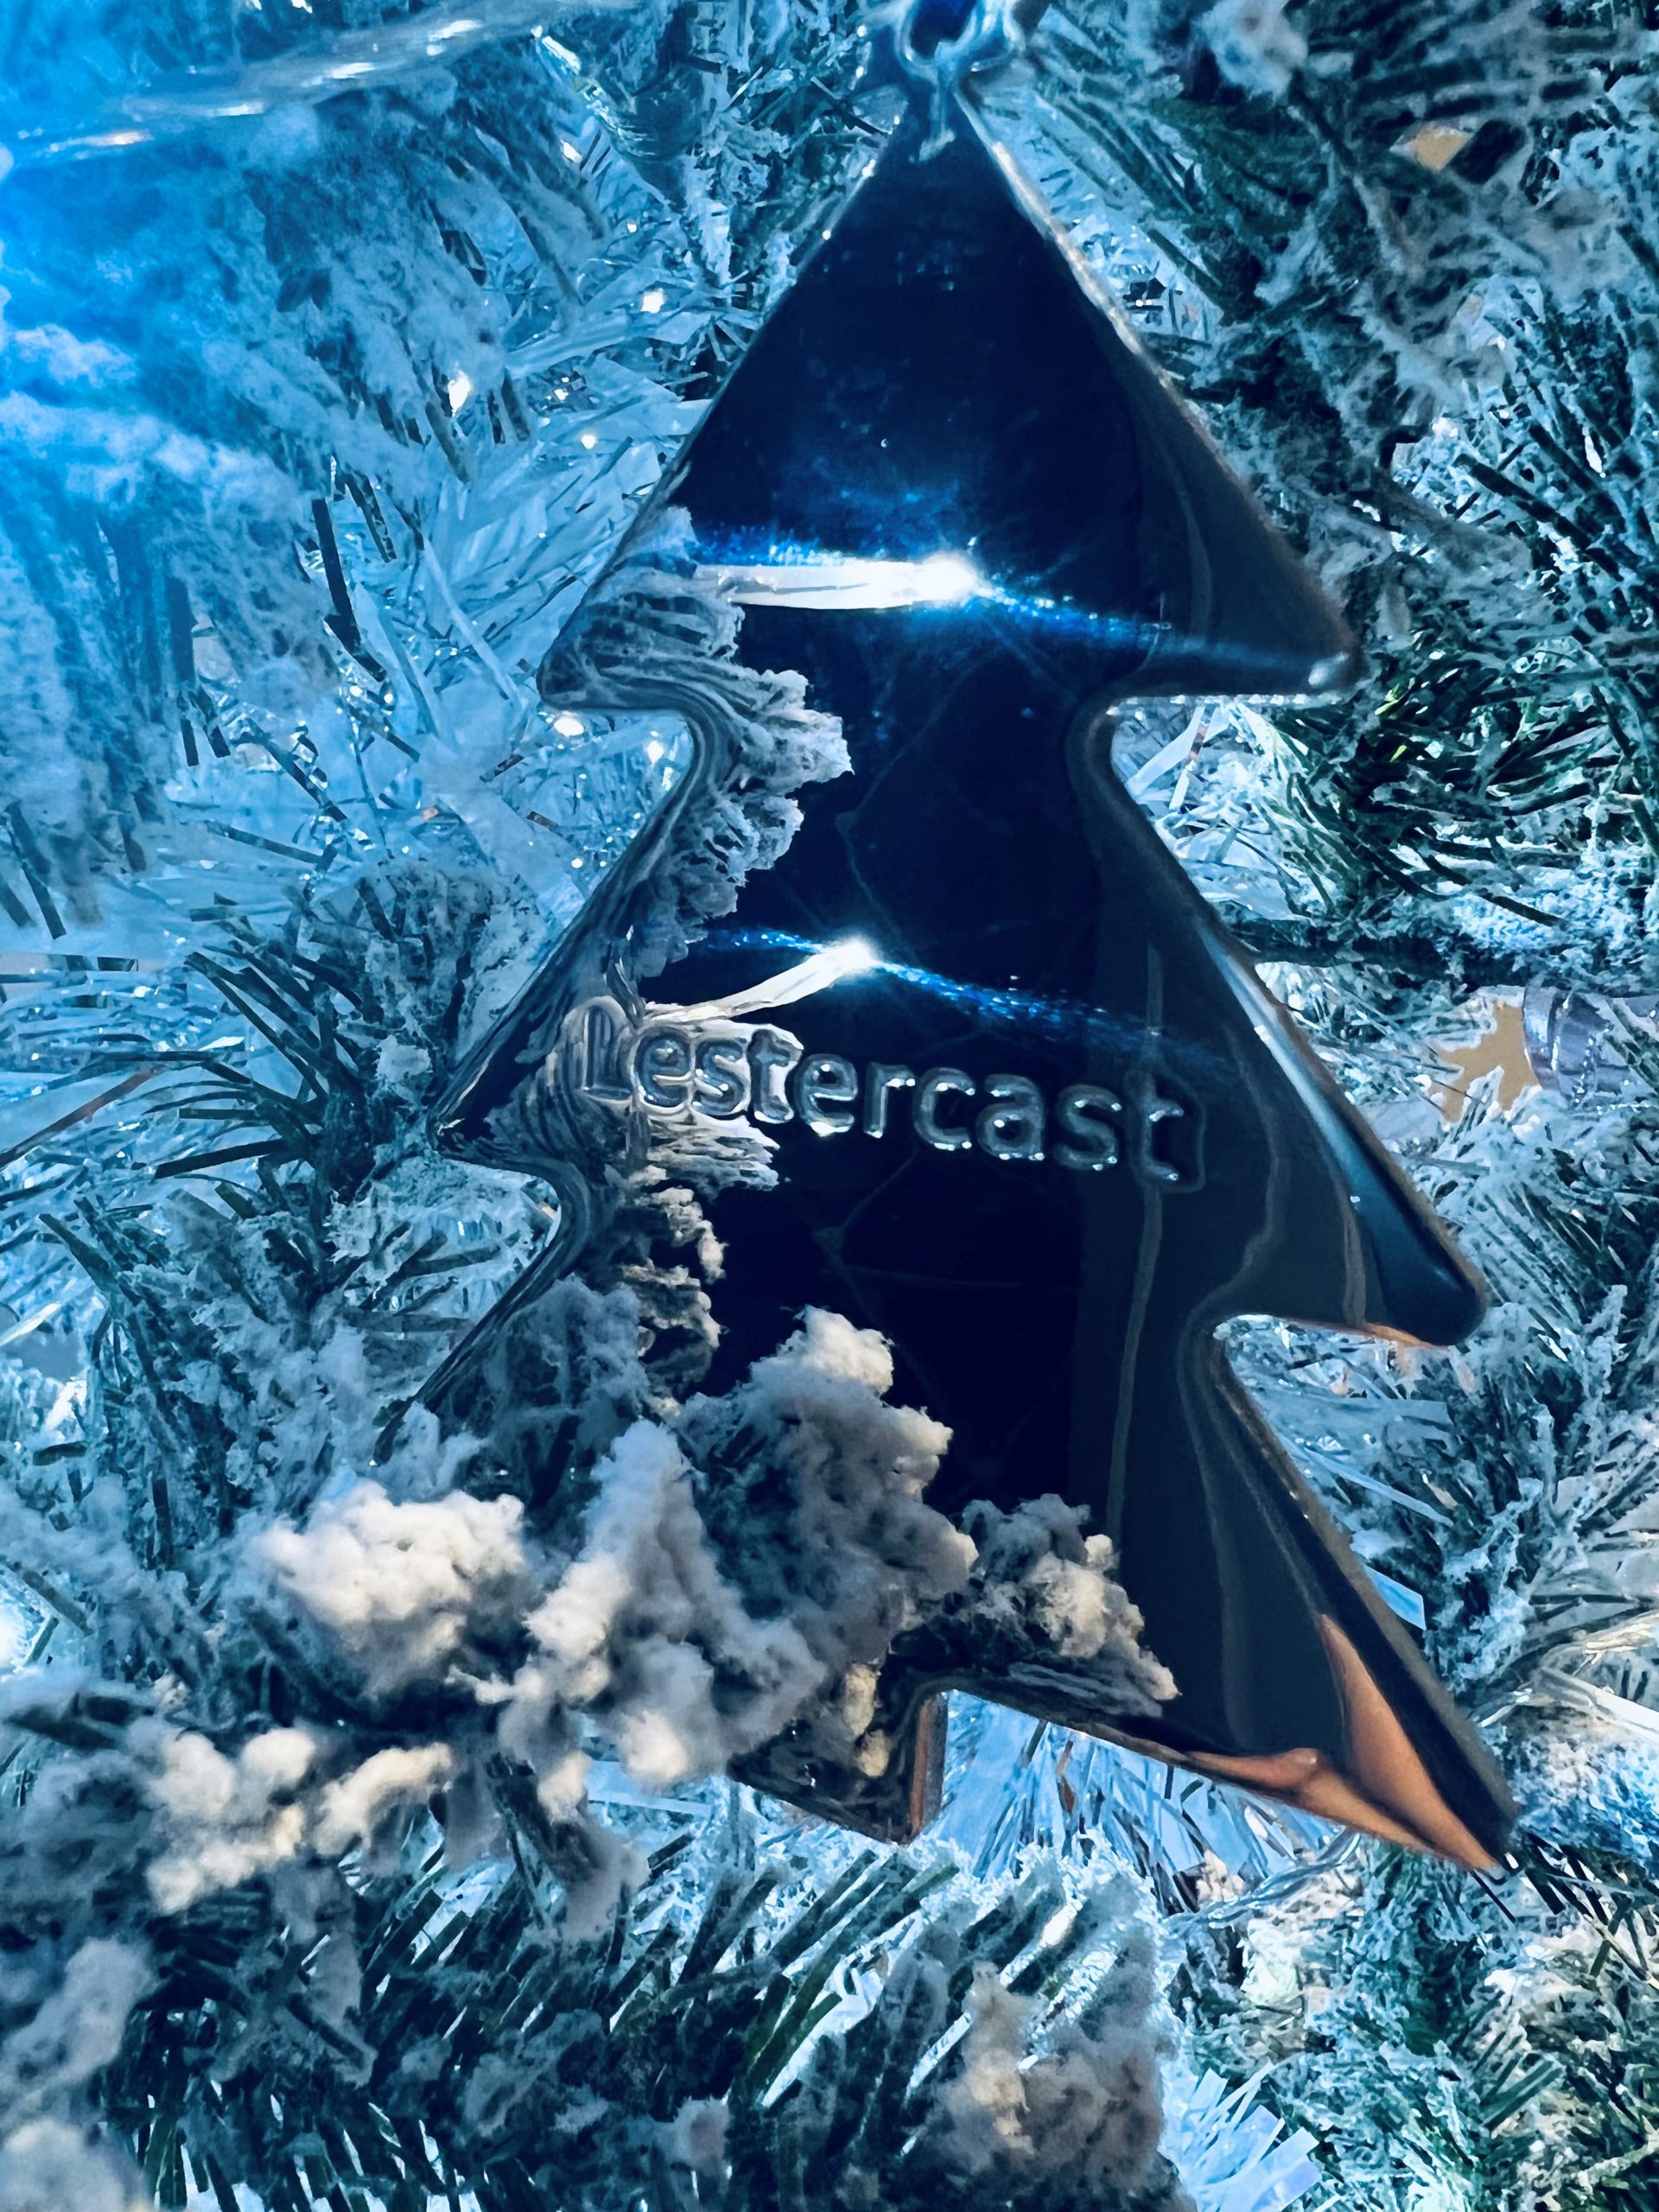 Merry Christmas 2021 Lestercast